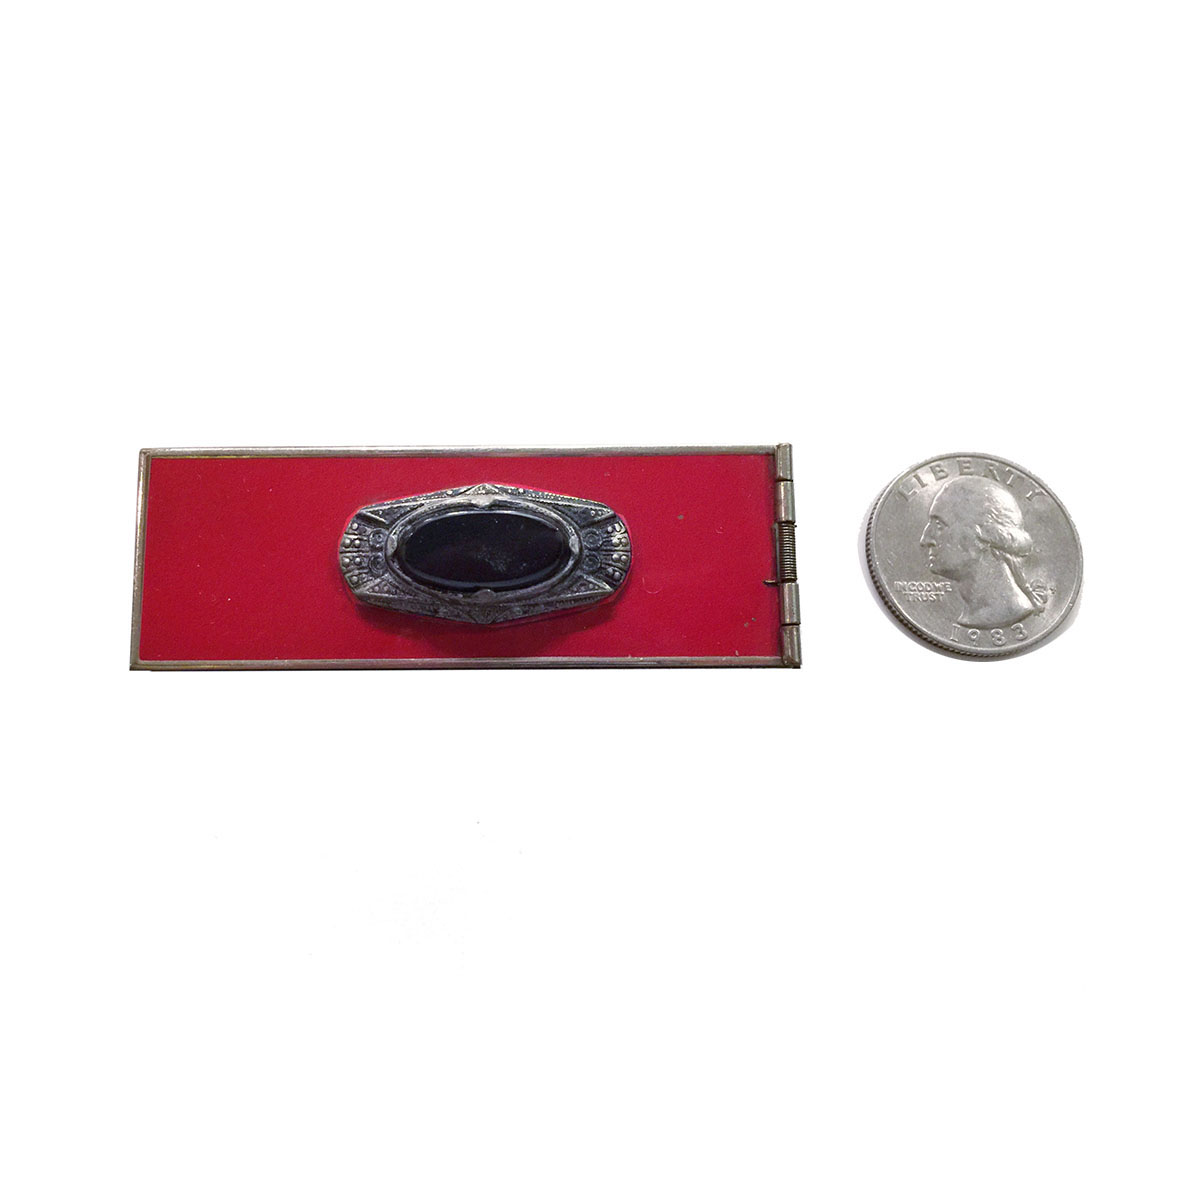 1930s pin